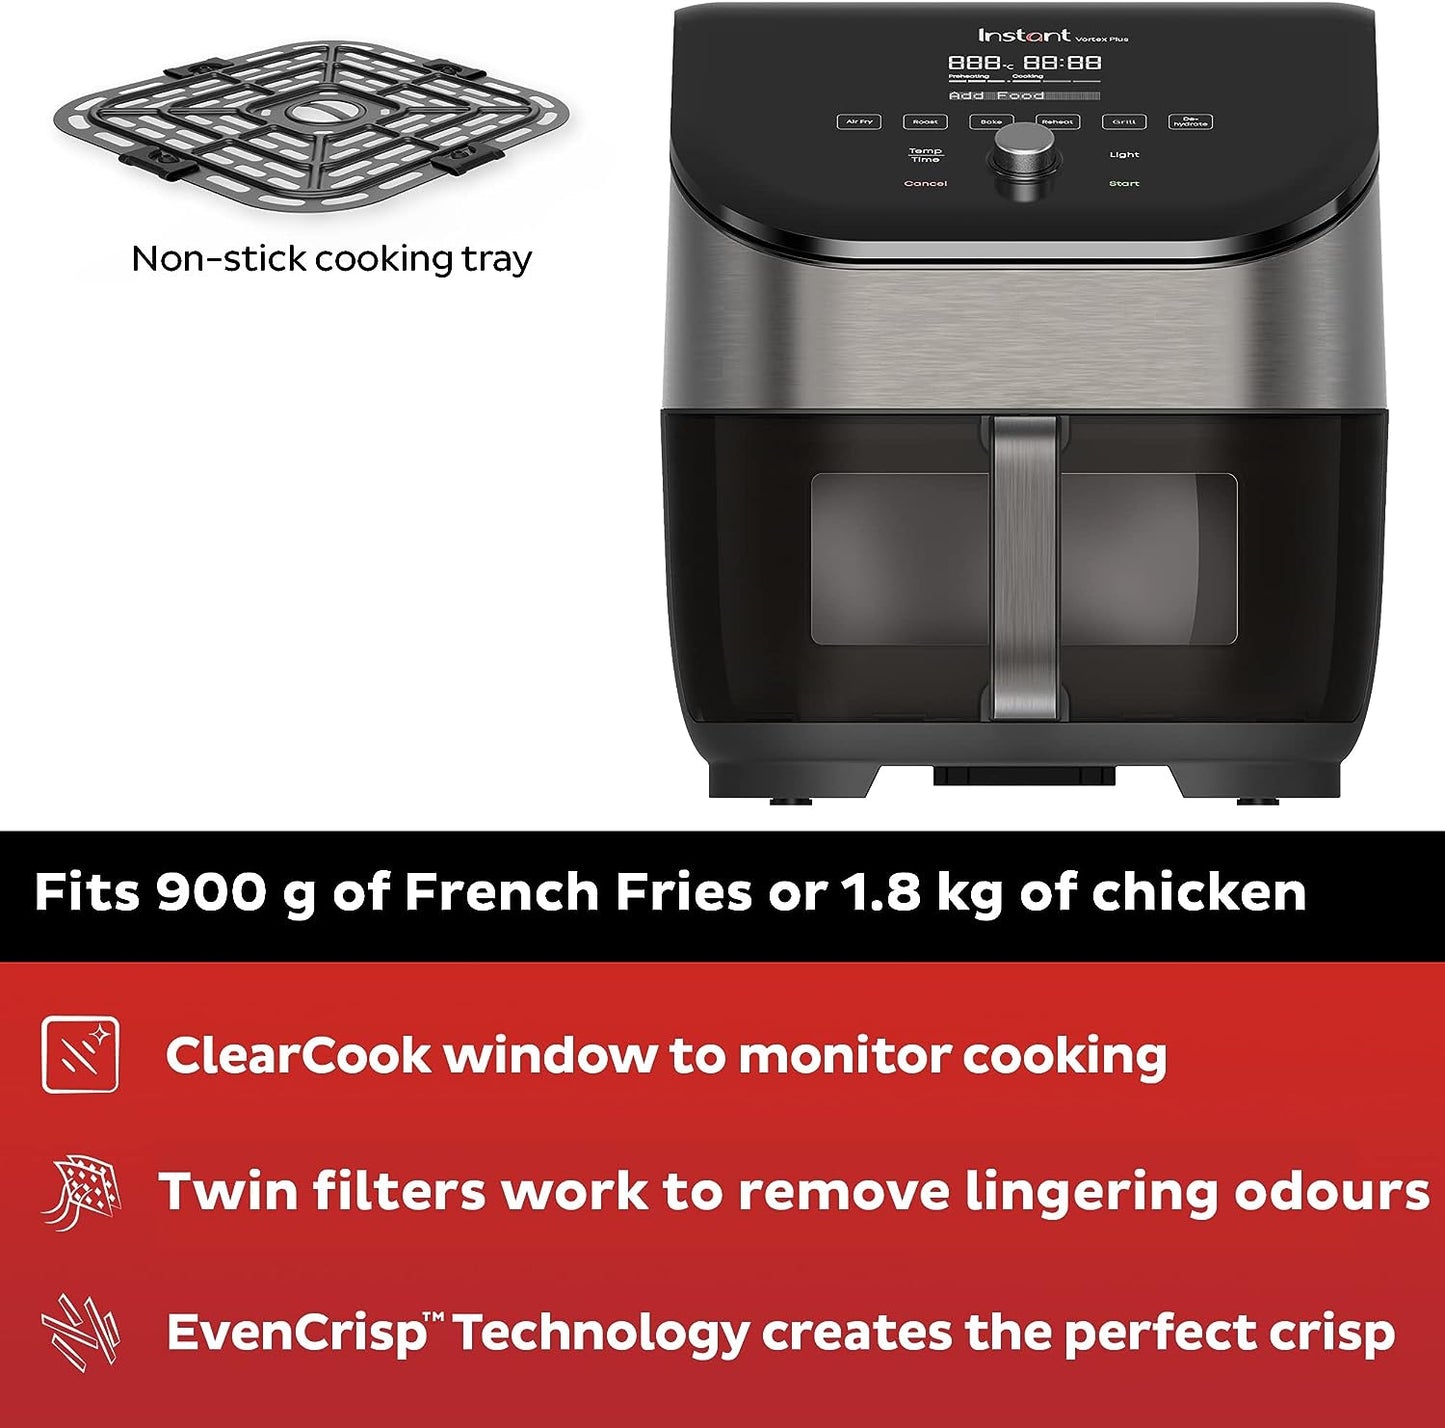 Instant Vortex Plus ClearCook - 5.7L Air Fryer, Stainless Steel, 6-in-1 Smart Programs - Air Fry, Bake, Roast, Grill